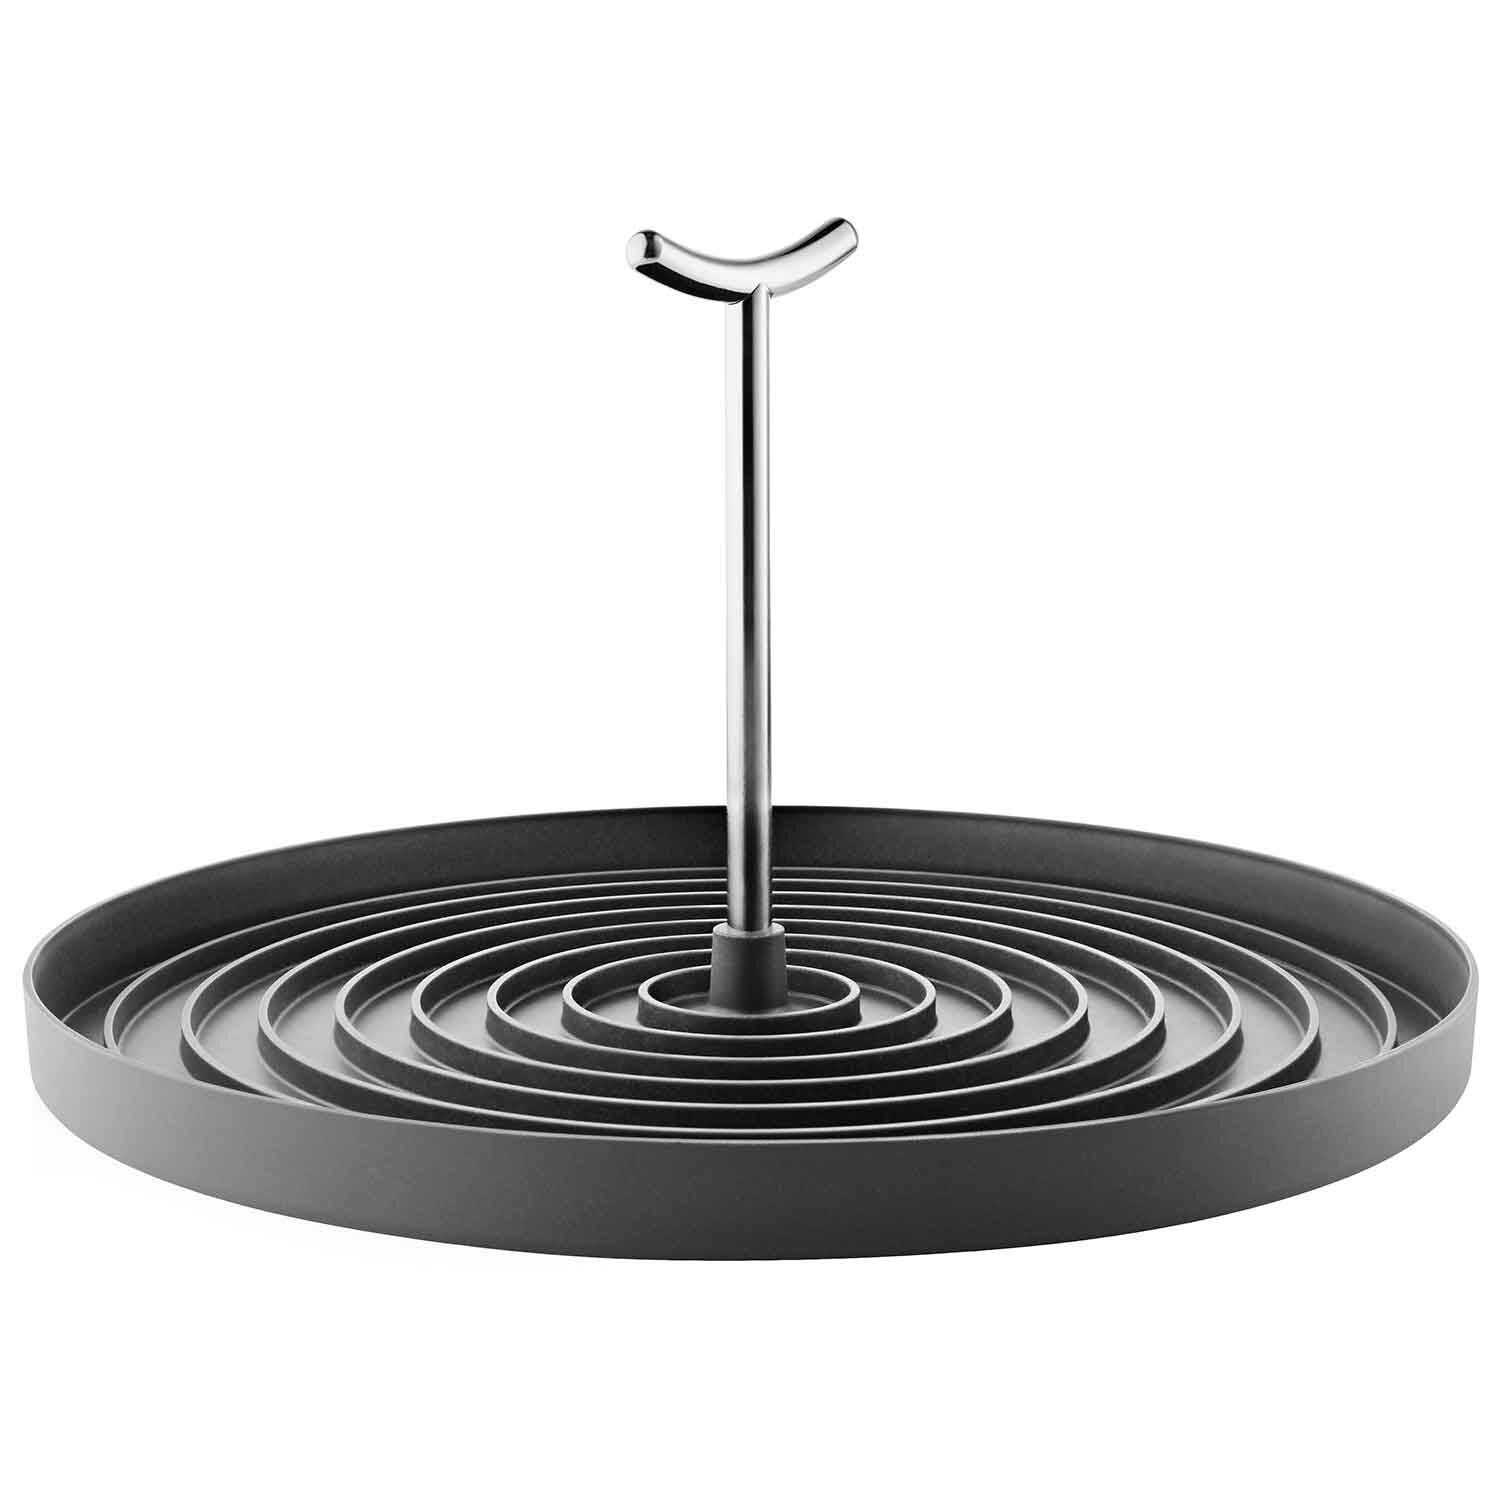 https://royaldesign.com/image/2/eva-solo-foldable-dish-drainer-31-cm-0